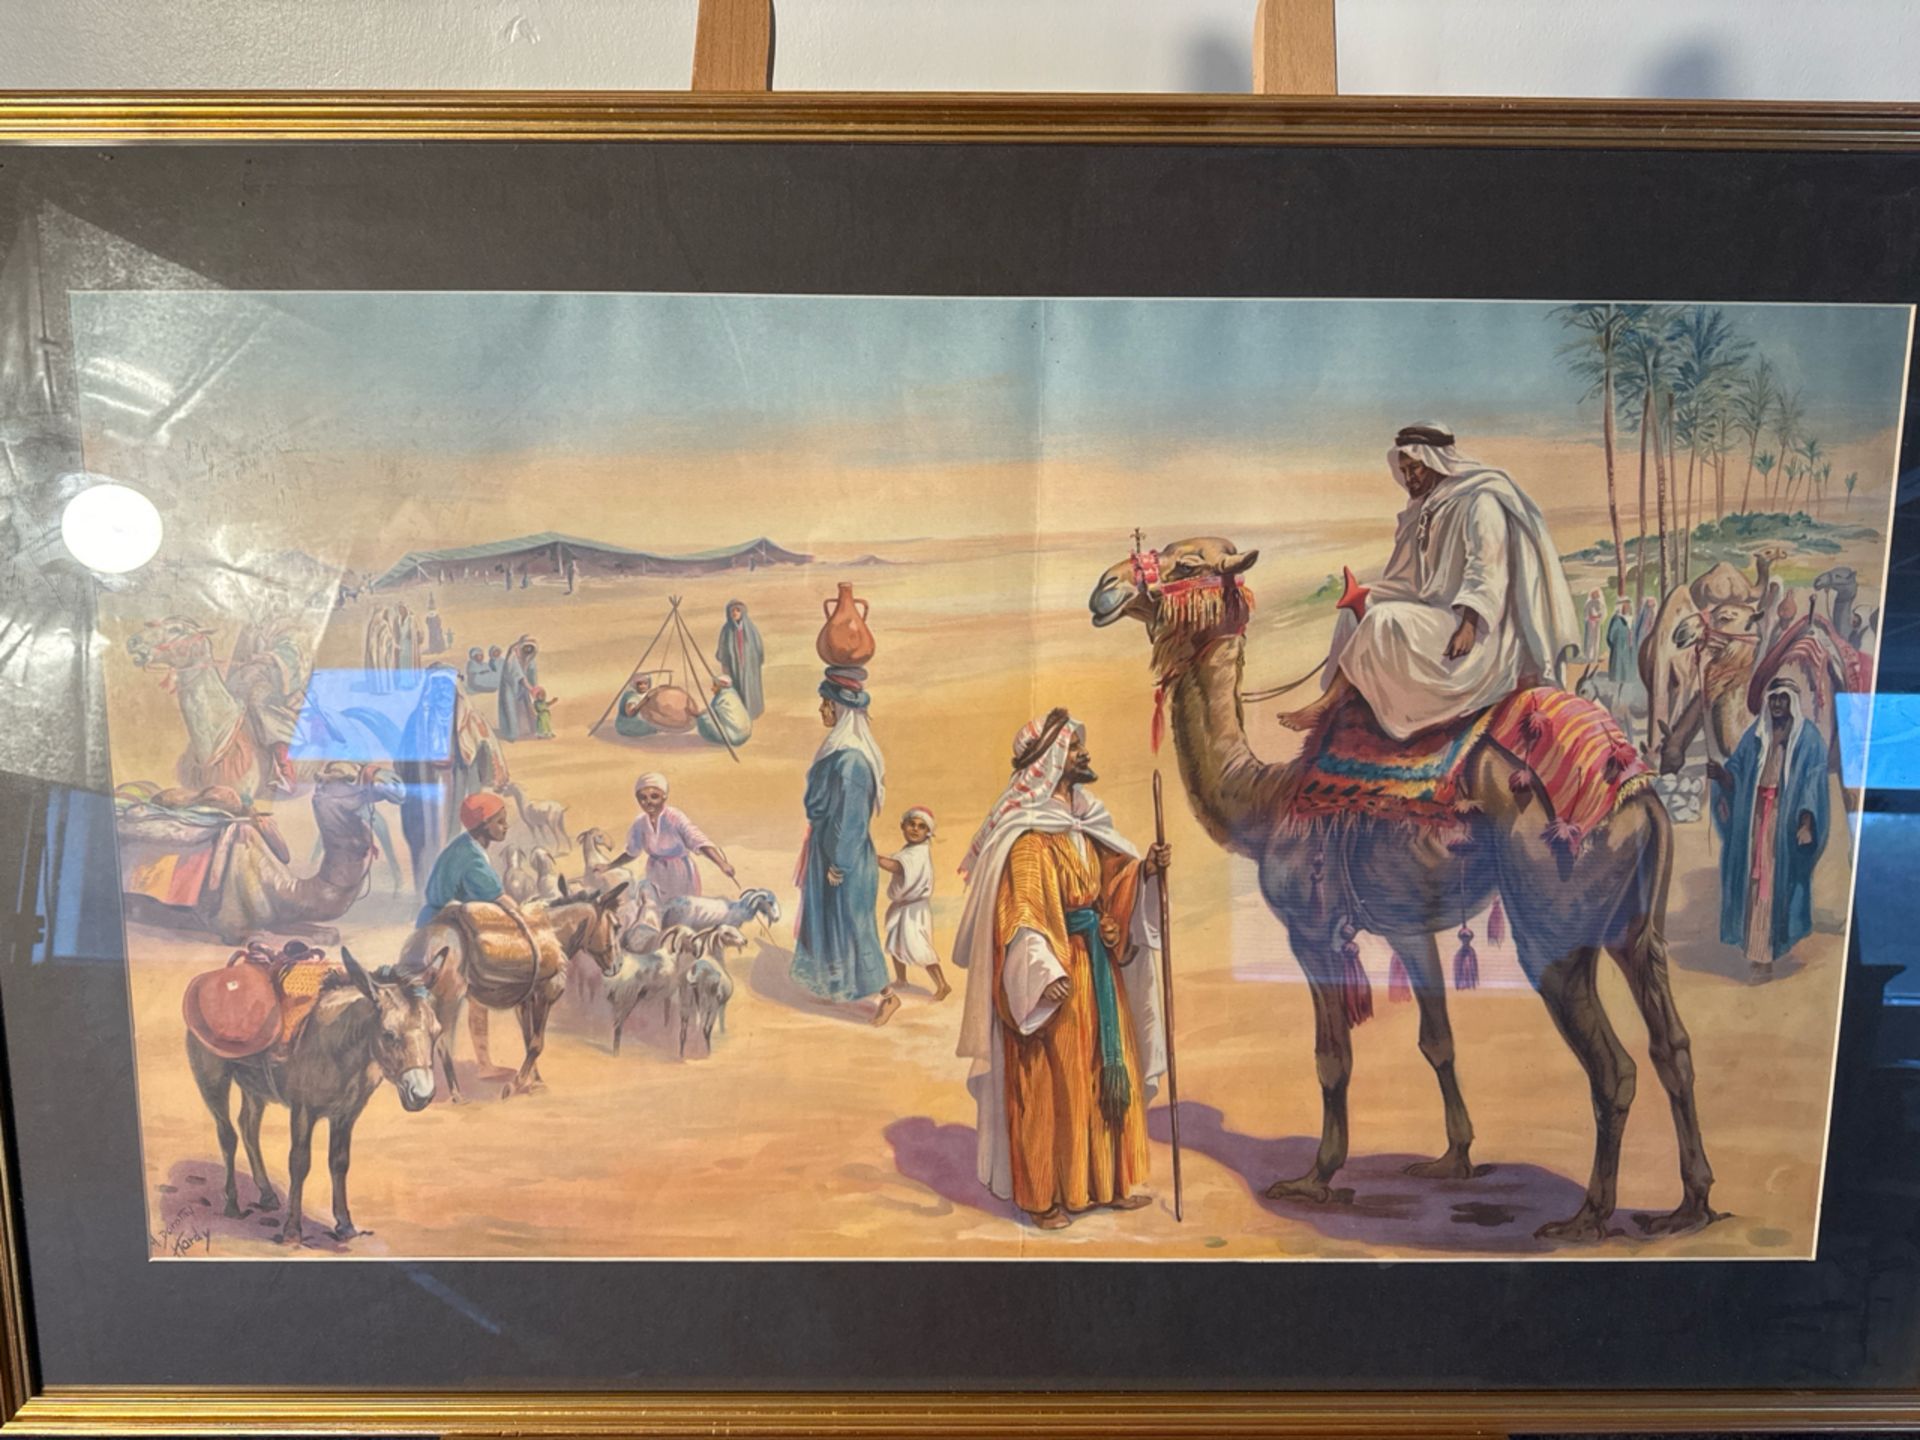 (ref 23) Camel and Desert Artwork Print - Image 2 of 4